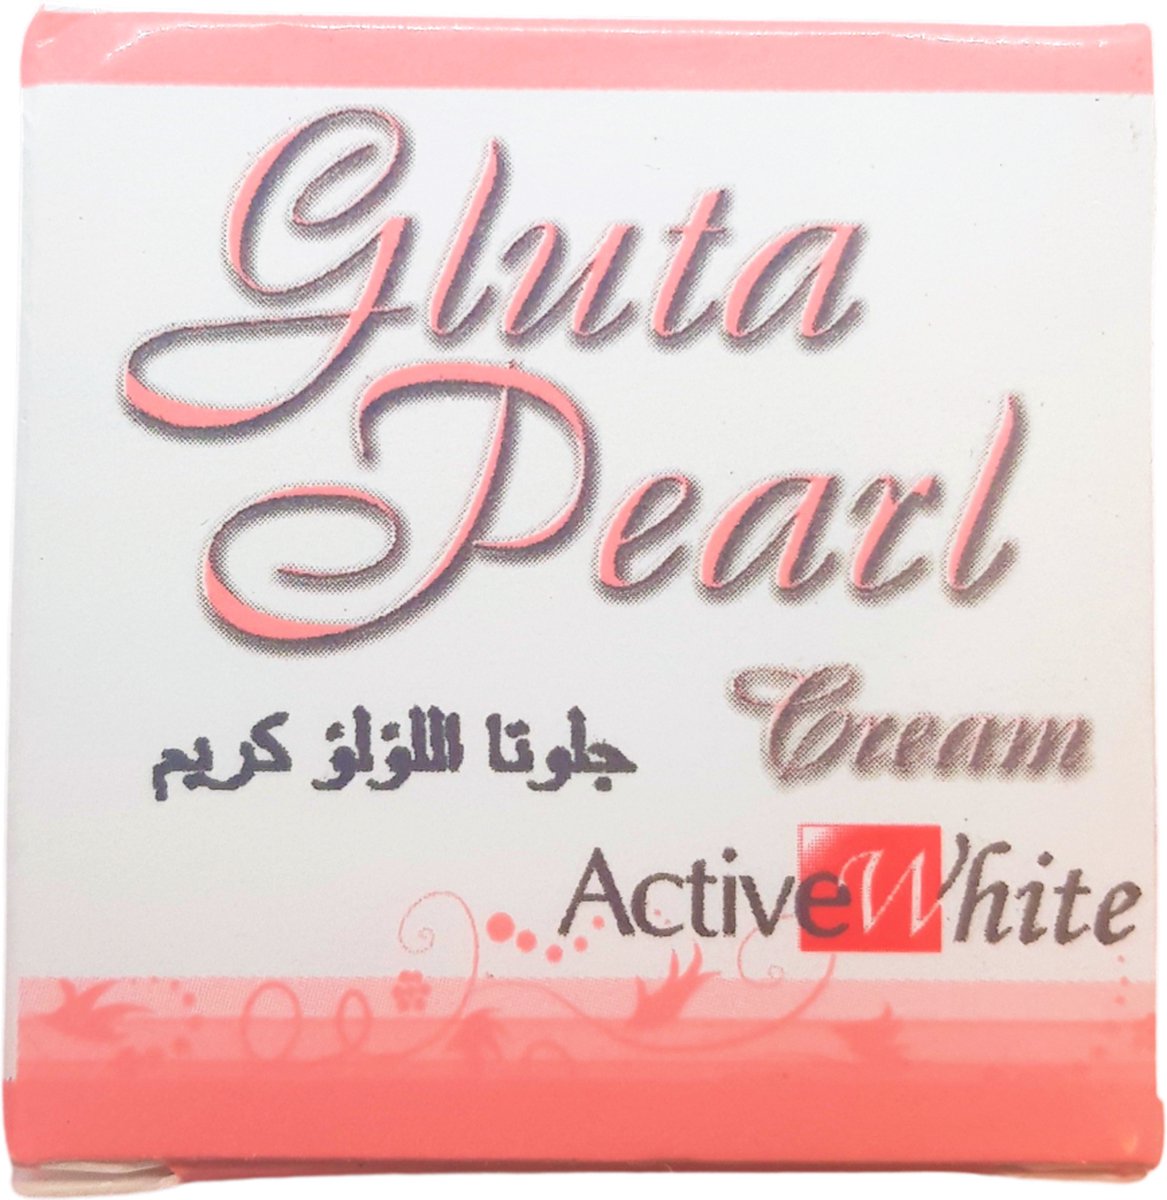 ActiveWhite GlutaPearl dagcrème, 3 gram